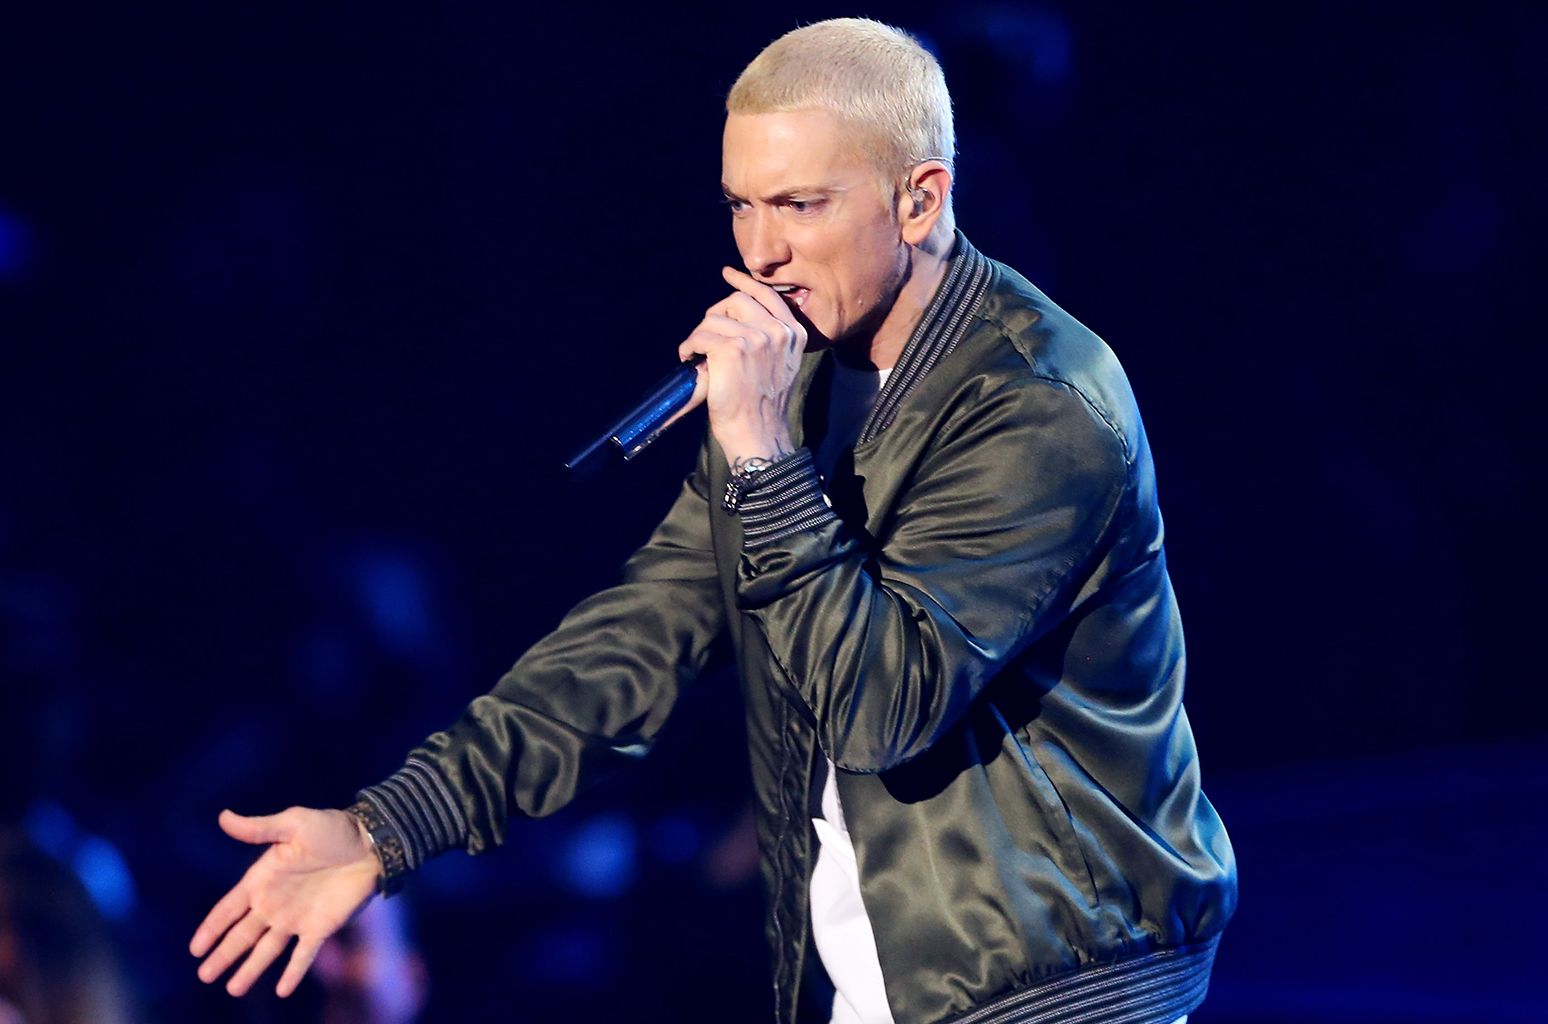 Eminem nos presenta el tracklist de ‘Revival’. Cusica Plus.